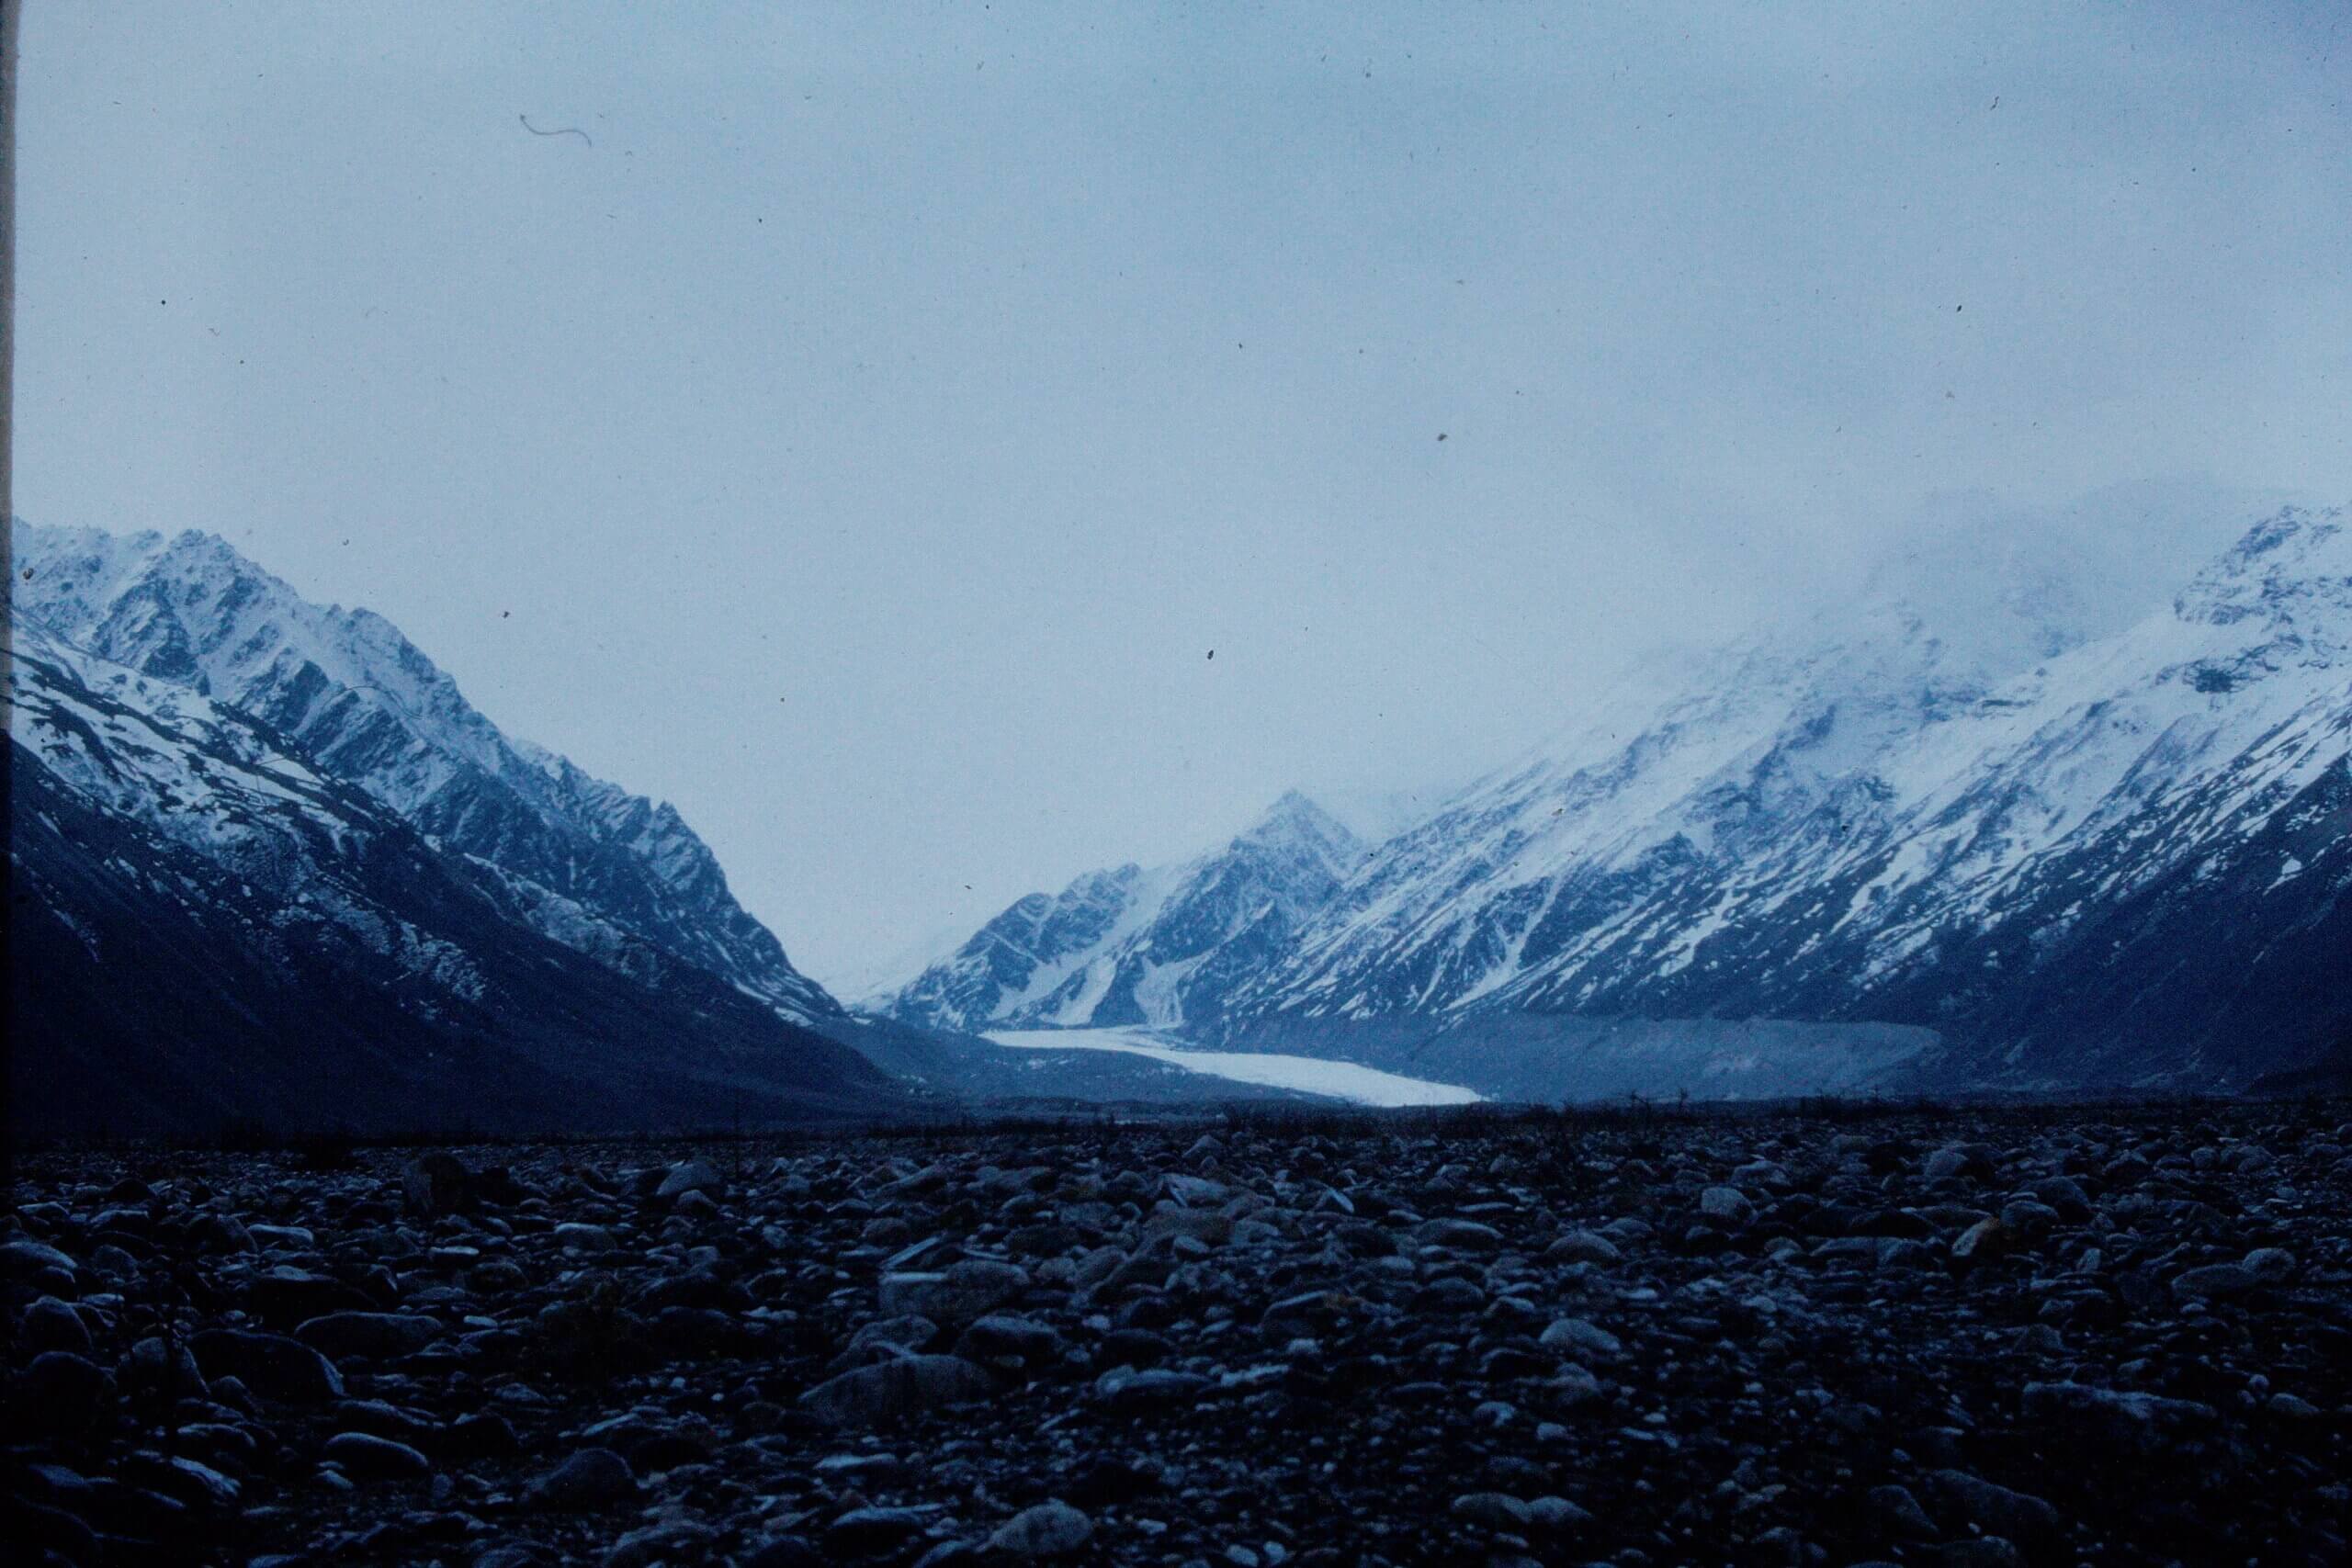 Gerstle Glacier - 1969